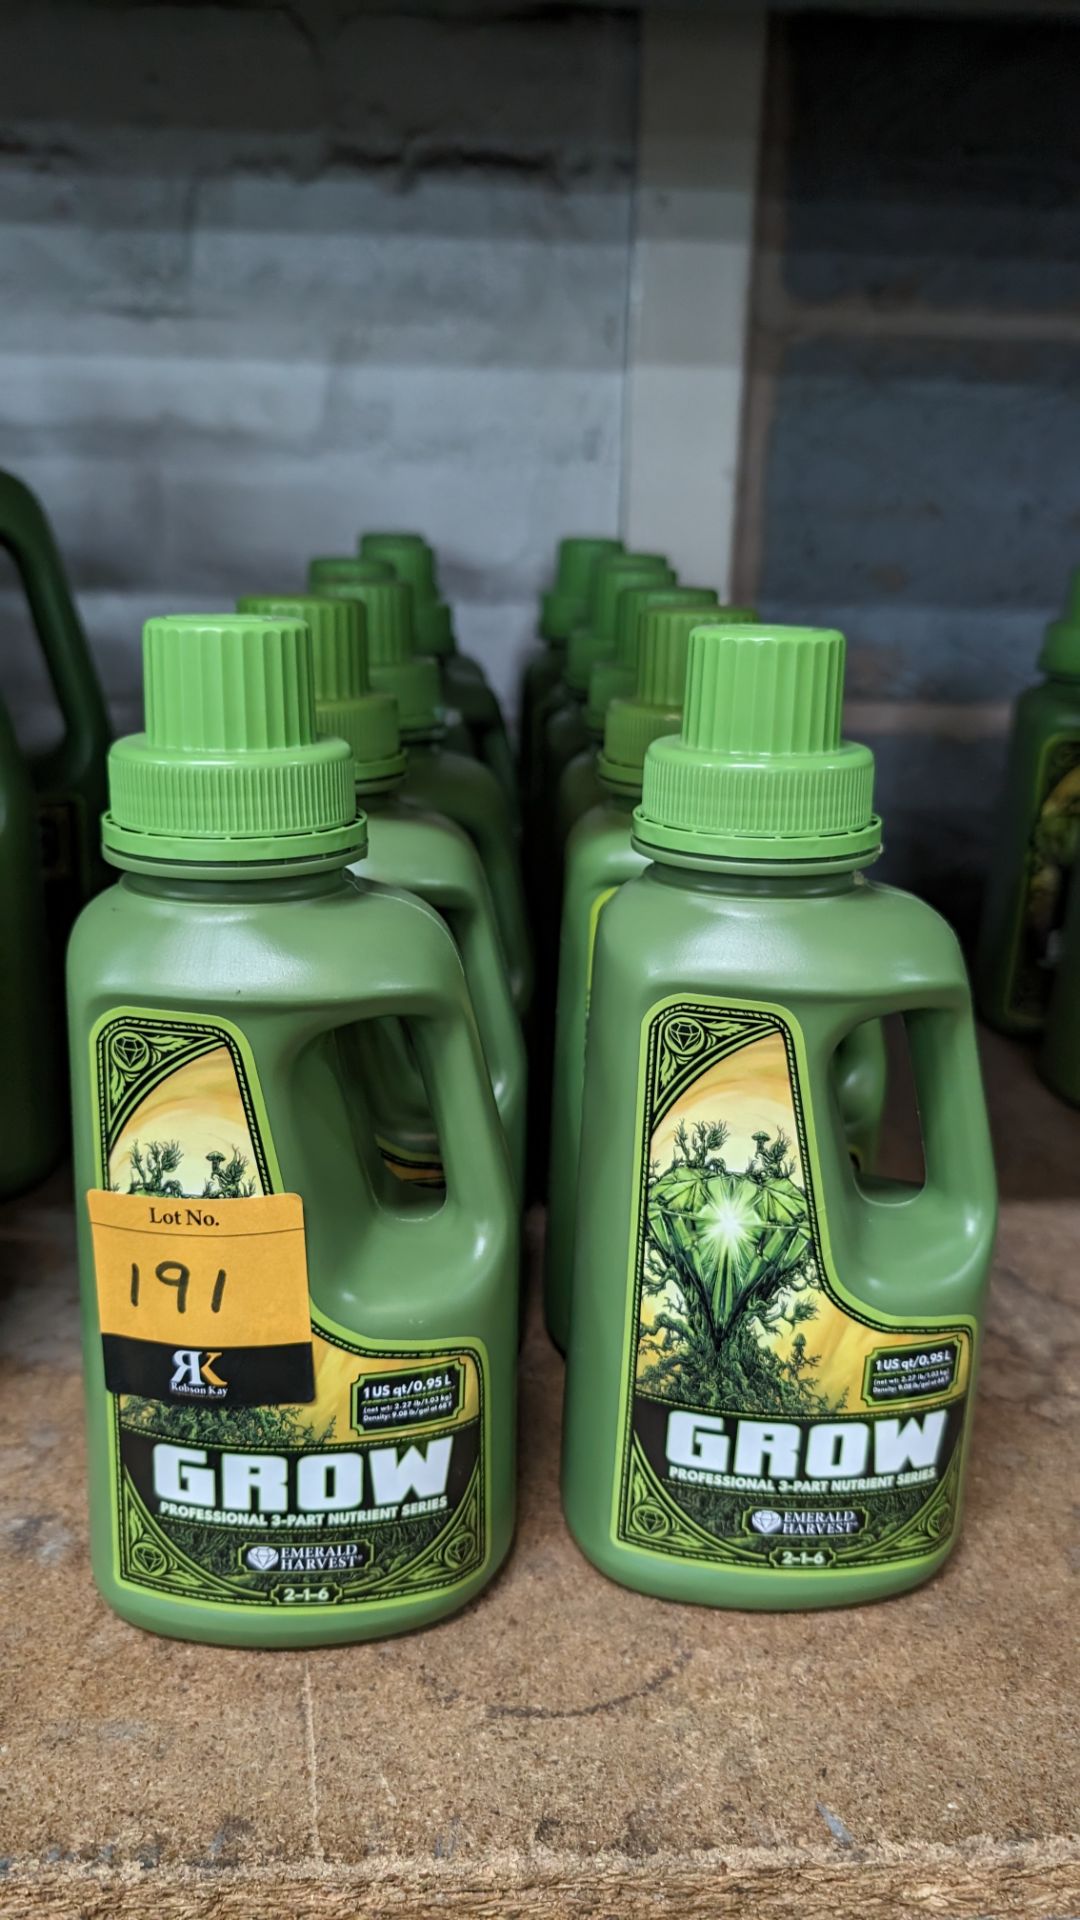 12 off 950ml bottles of Emerald Harvest Grow 2-1-6 Professional 3 Part Nutrient Series